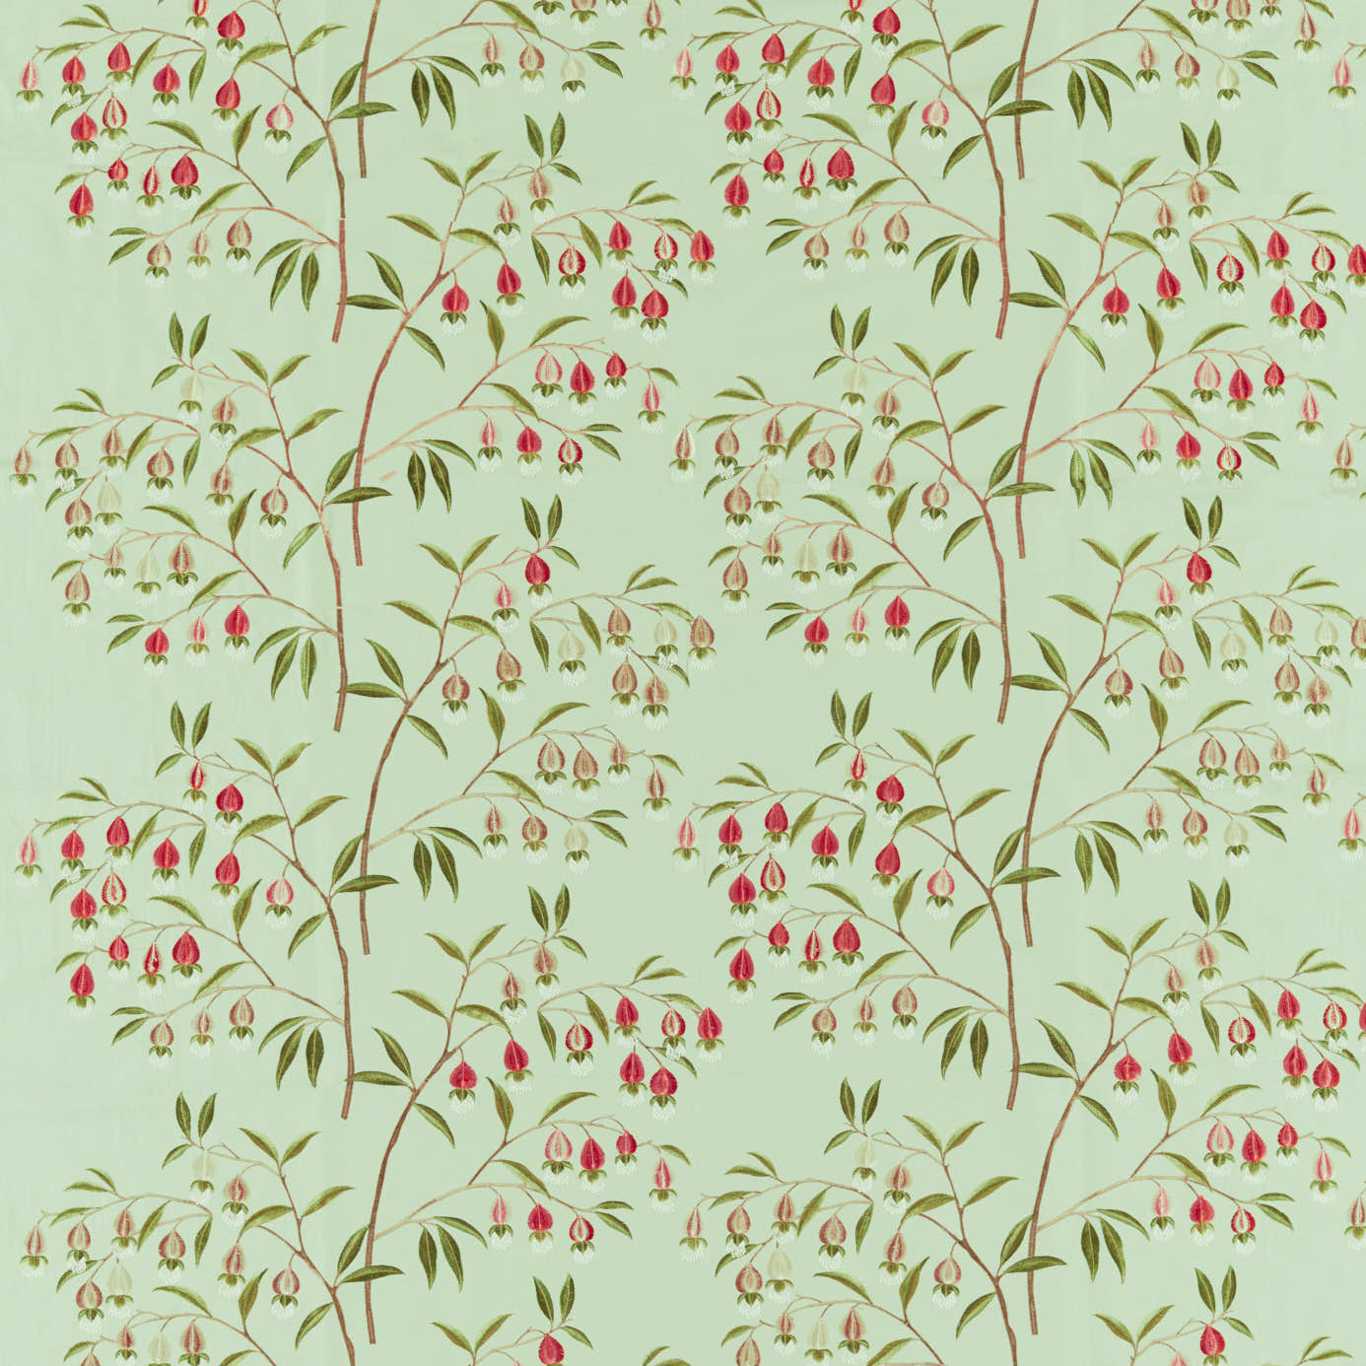 Chinese Lantern Fabric by Sanderson - DWAT237270 - Mint & Apricot